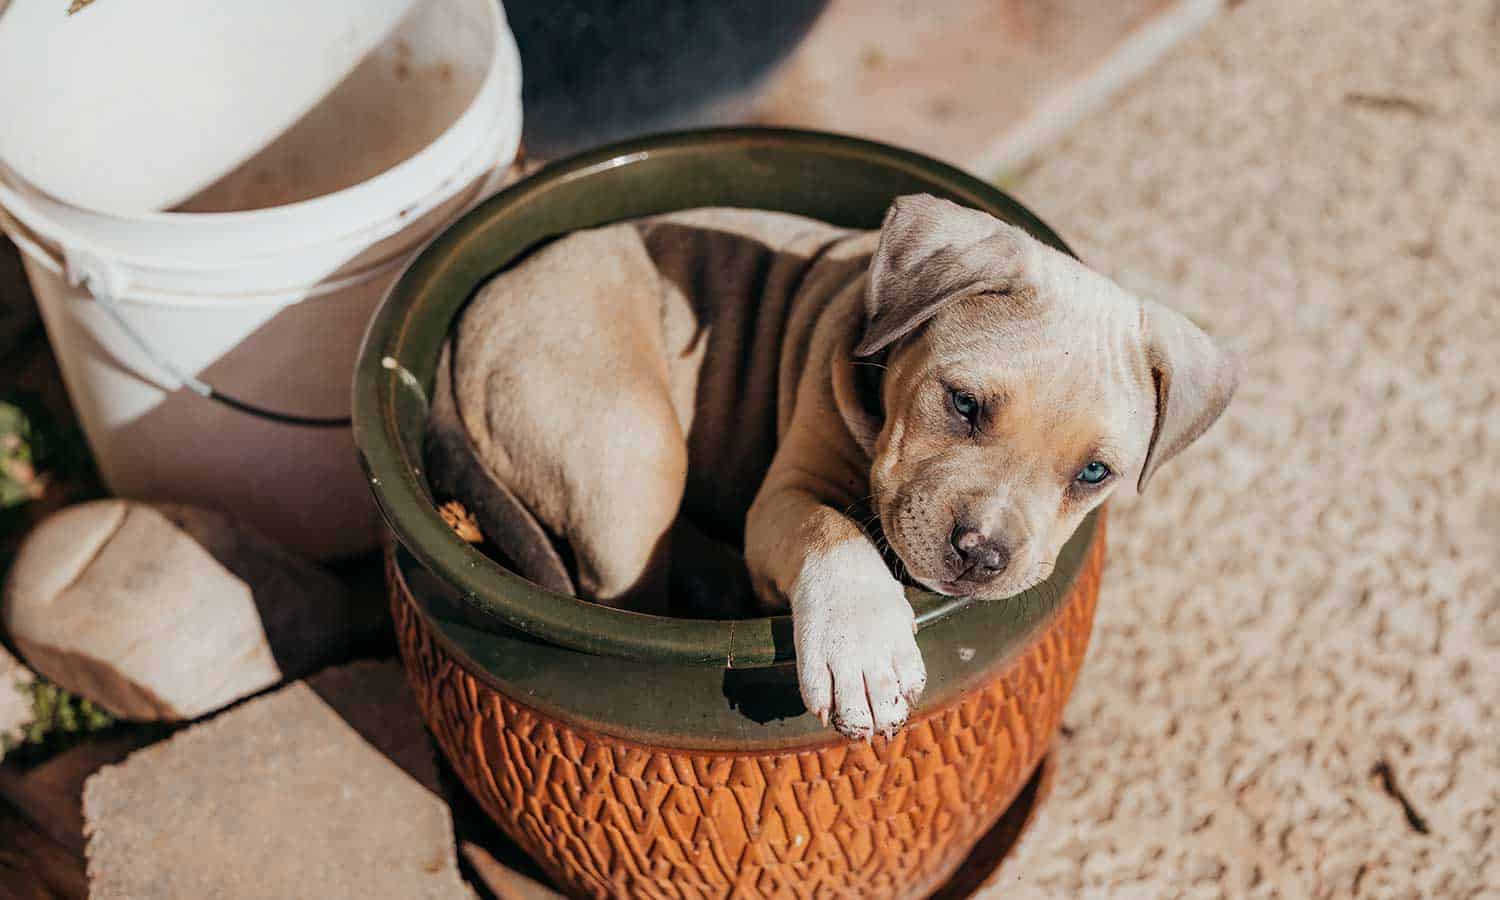 A puppy in a planter